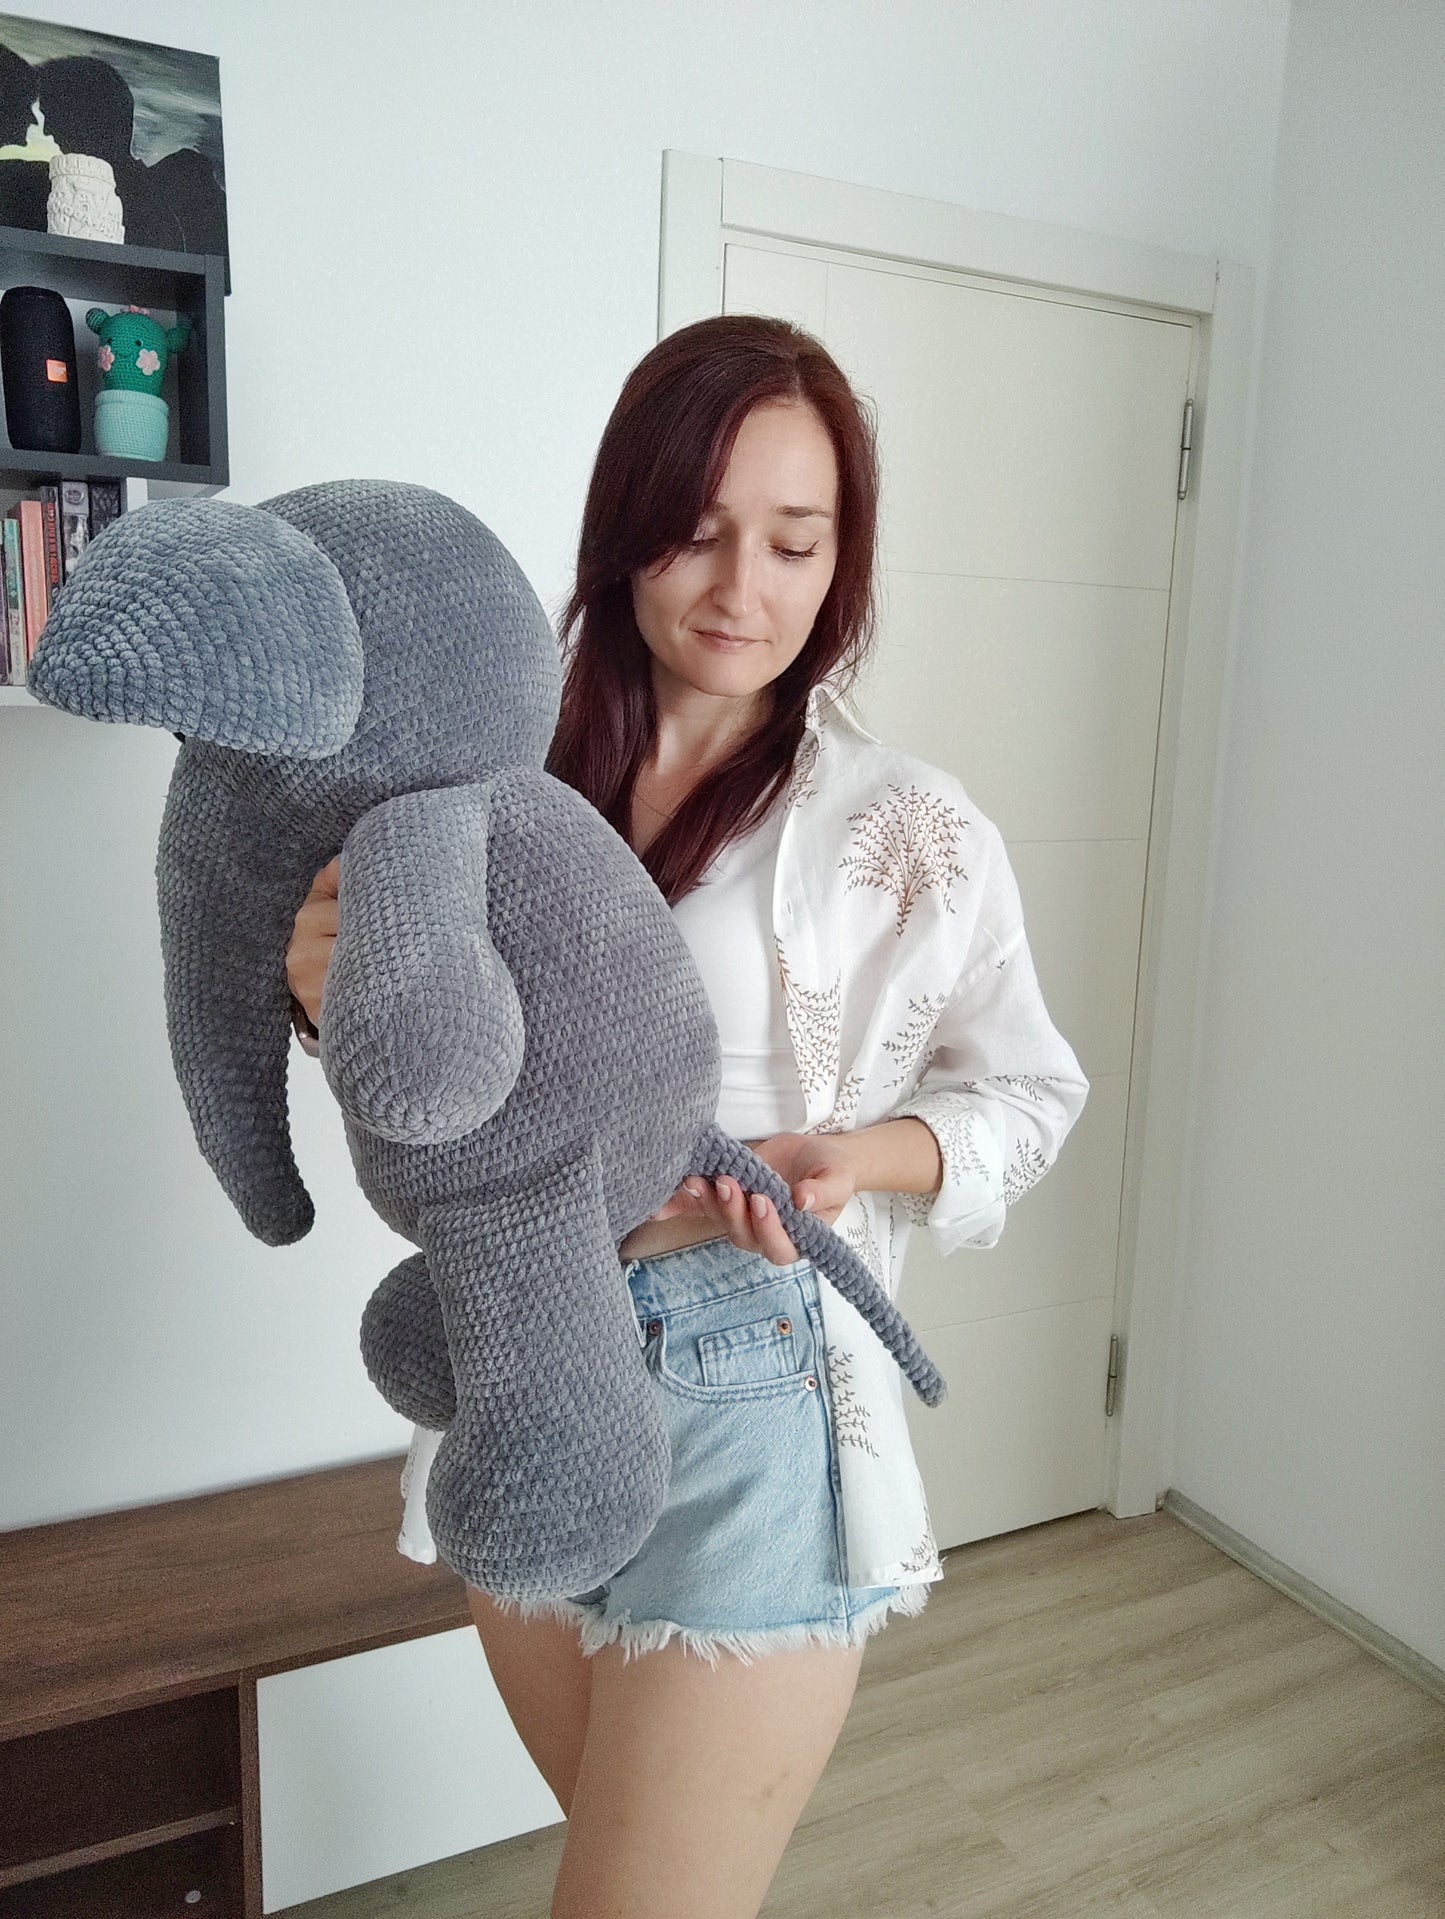 Crochet big grey elephant pillow pattern english, big elephant pattern, Amigurumi patterns, Crochet elephant tutorial